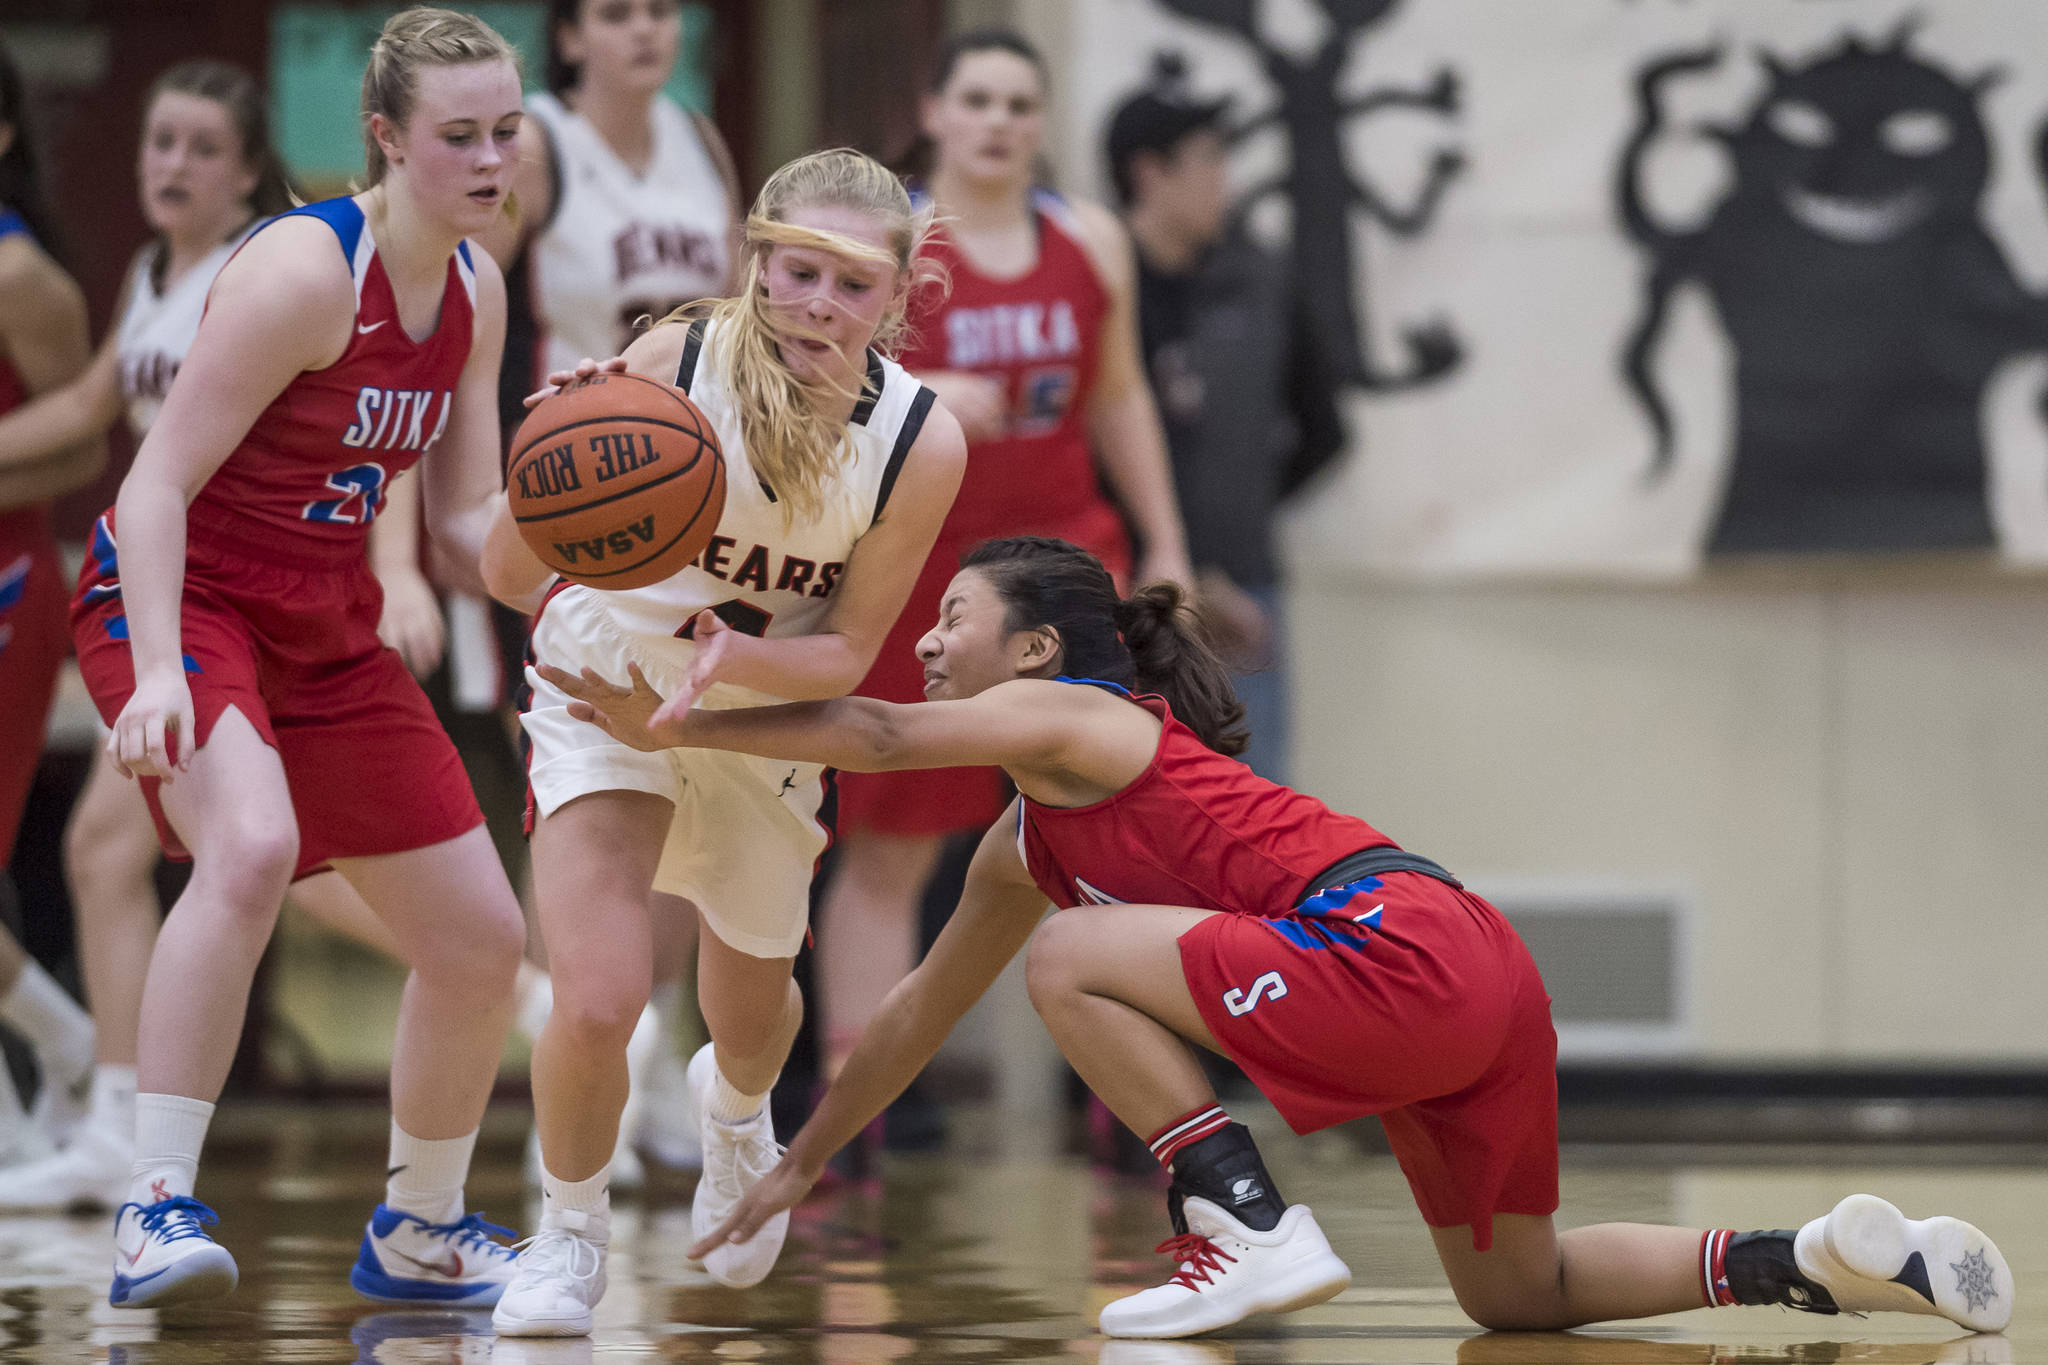 Juneau-Douglas’ Sadie Tuckwood, center, steals the ball against Sitka’s Tiffany Elefante, right, at JDHS on Friday, Jan. 25, 2019. Sitka won 37-31. (Michael Penn | Juneau Empire)